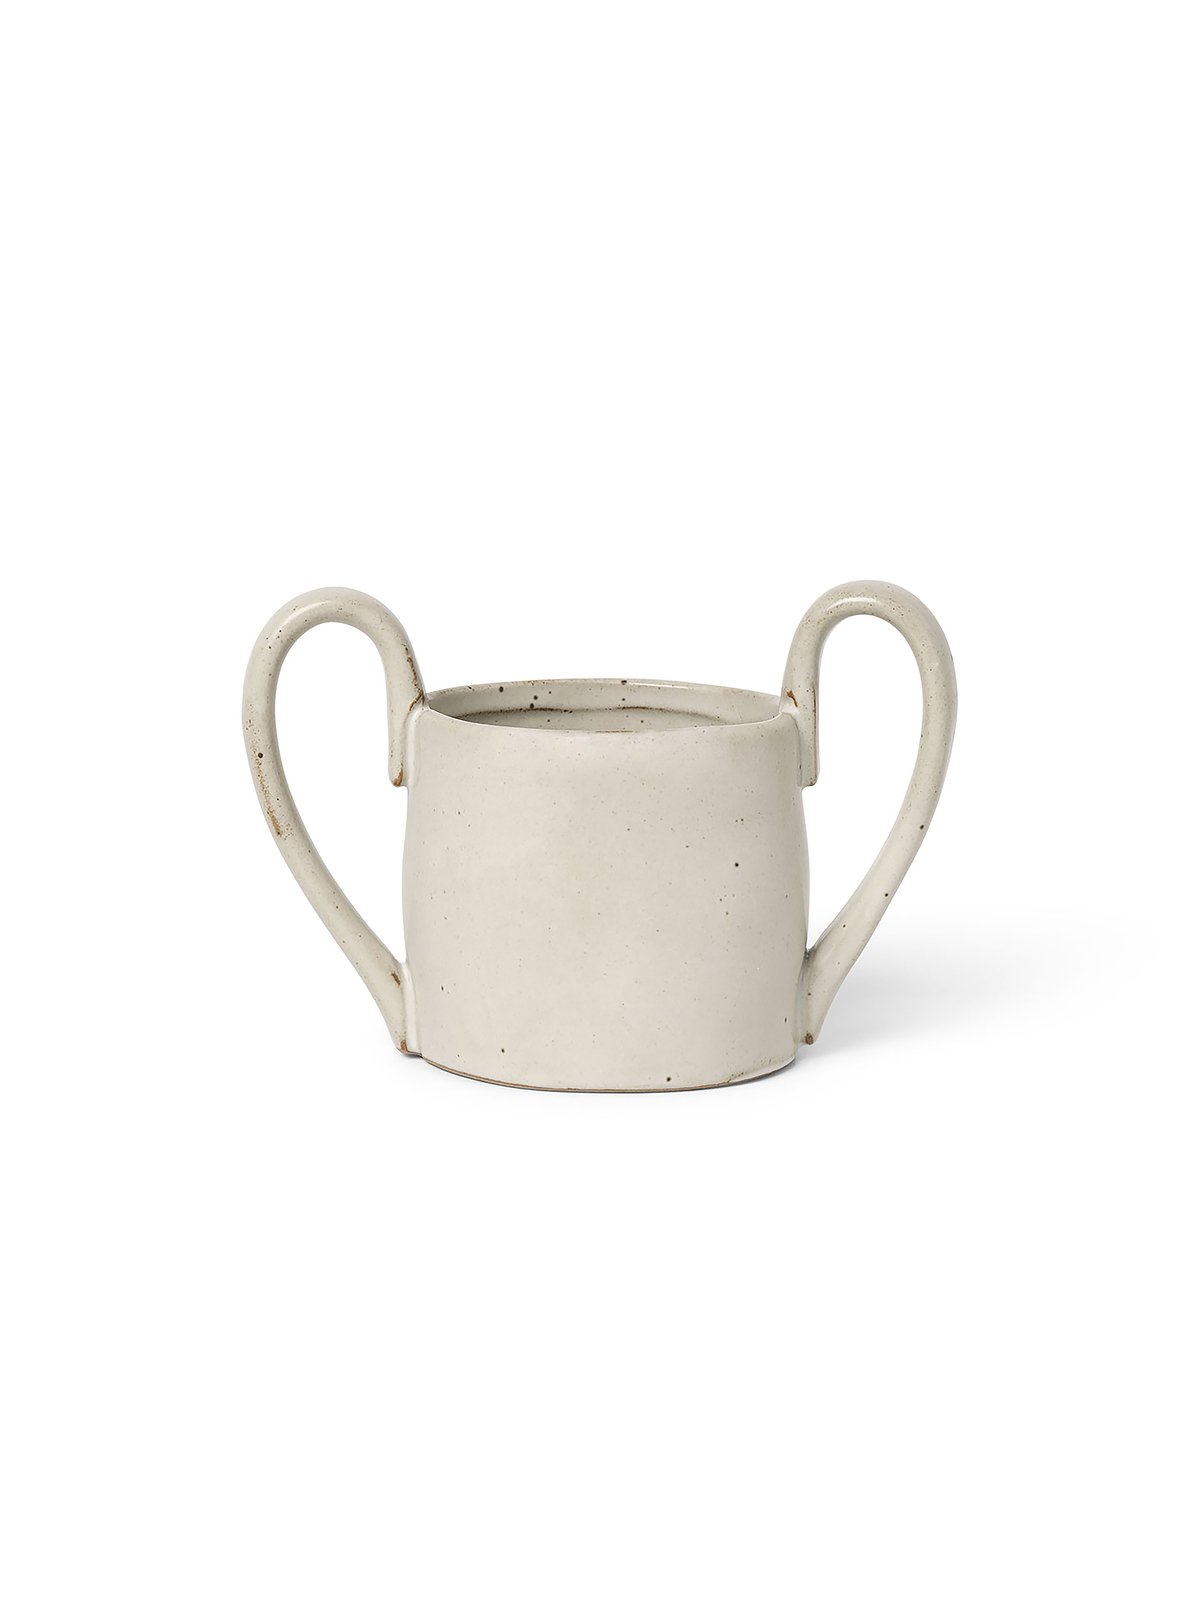 Flow Kids Mug with Two Handles | Off-White | Ceramic | by ferm Living - Lifestory - ferm Living